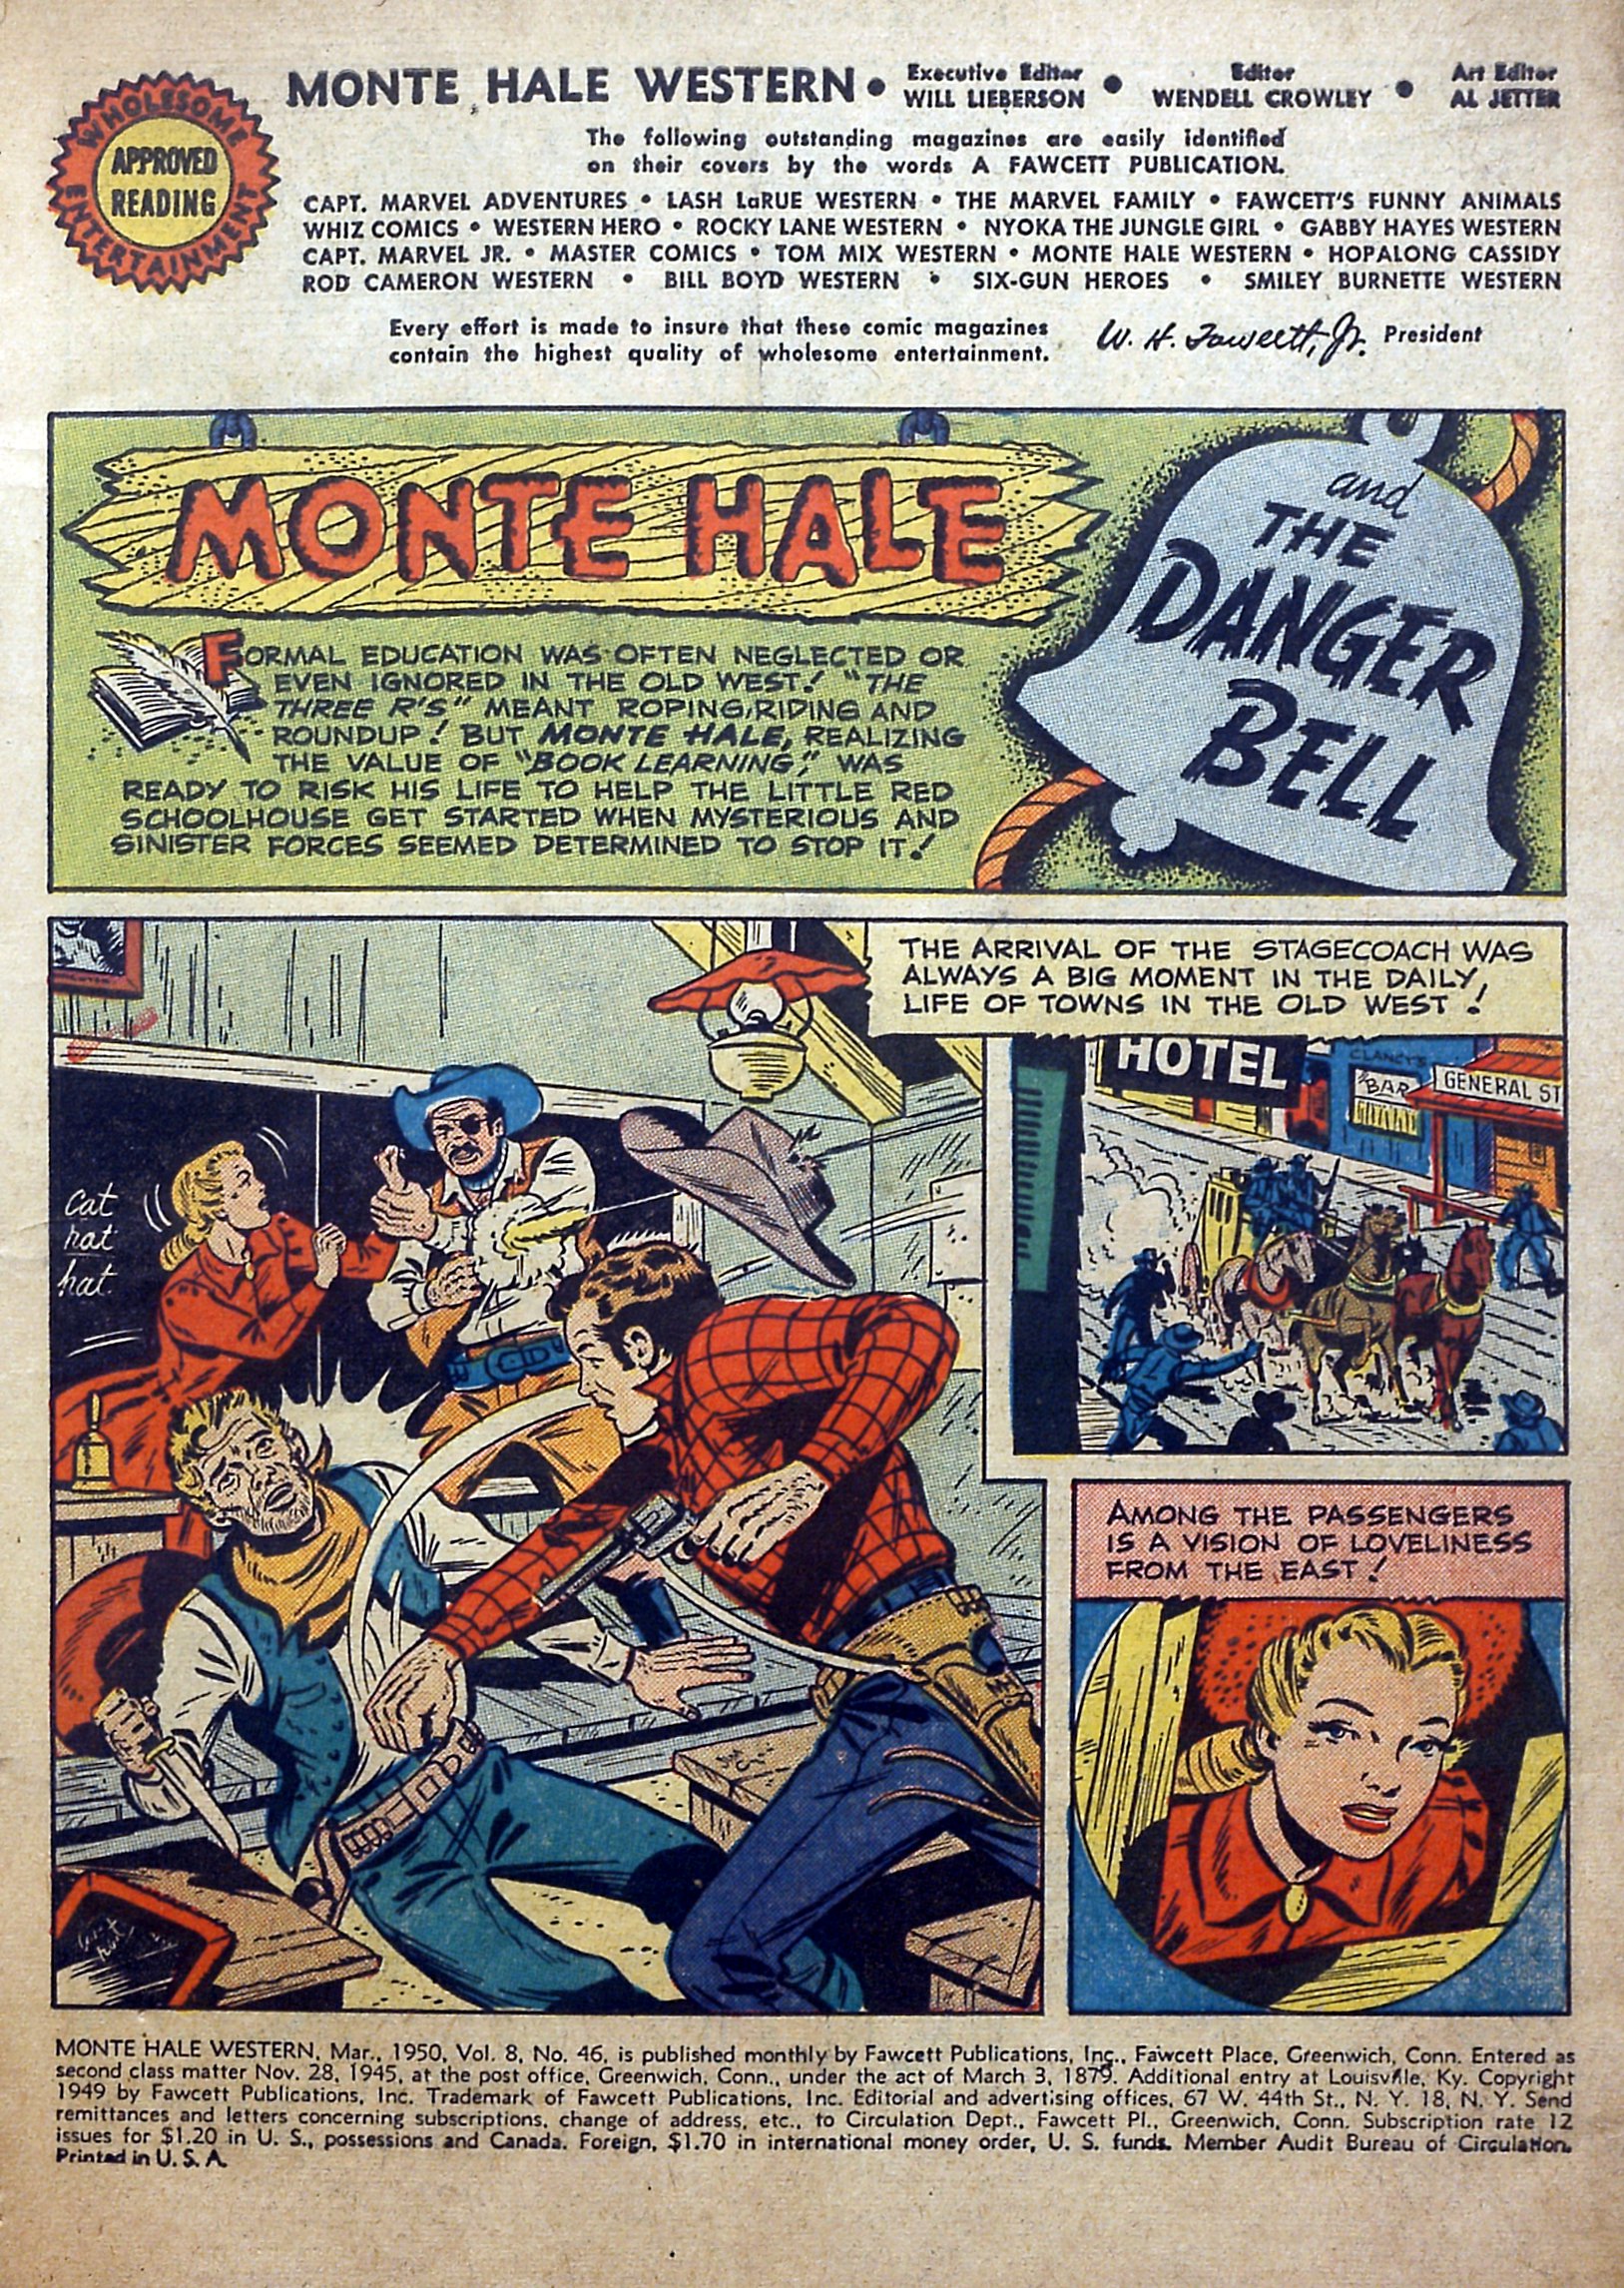 Read online Monte Hale Western comic -  Issue #46 - 3